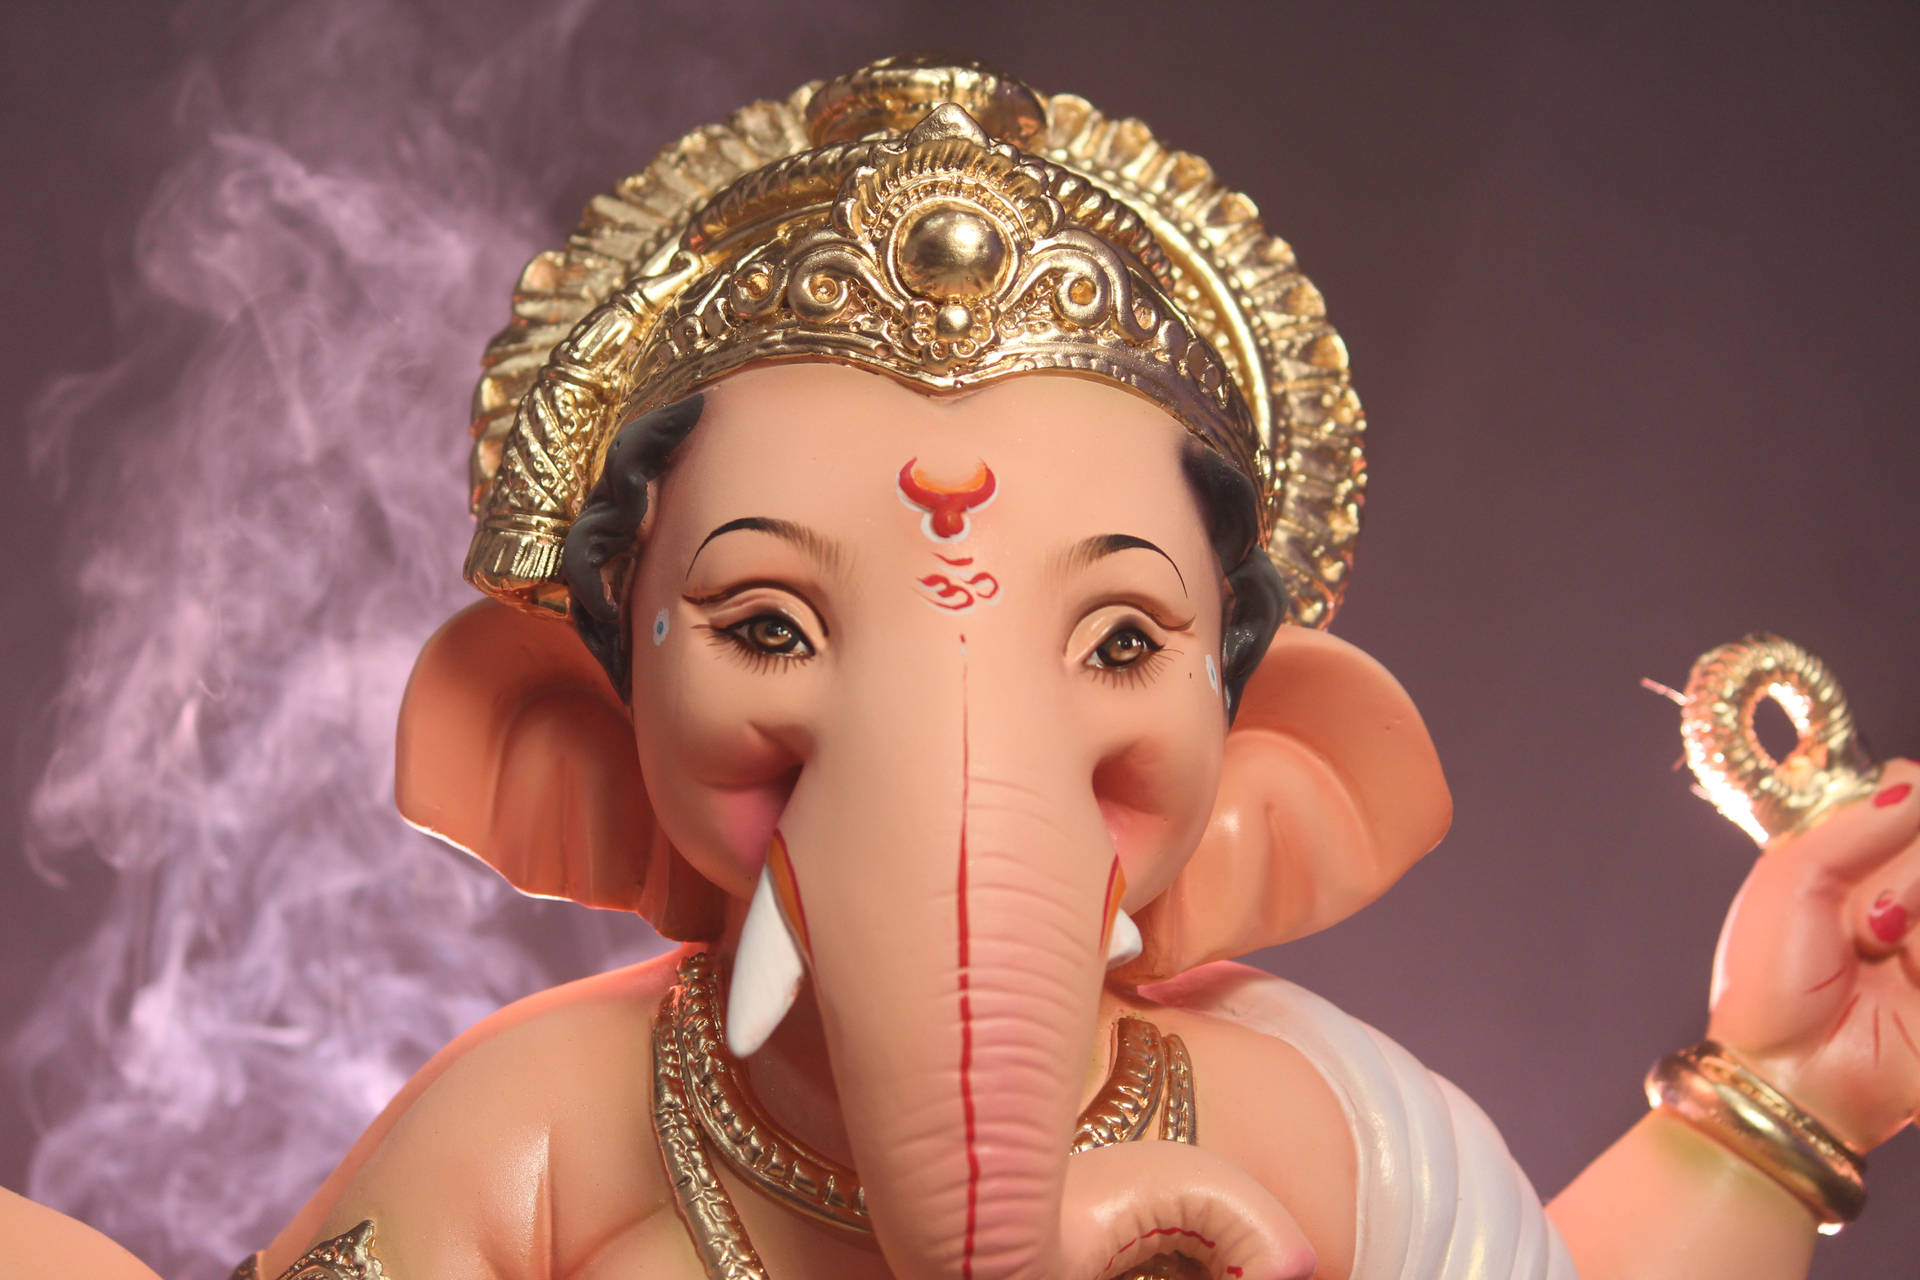 Free Ganesh 4k Wallpaper Downloads, [100+] Ganesh 4k Wallpapers for FREE |  